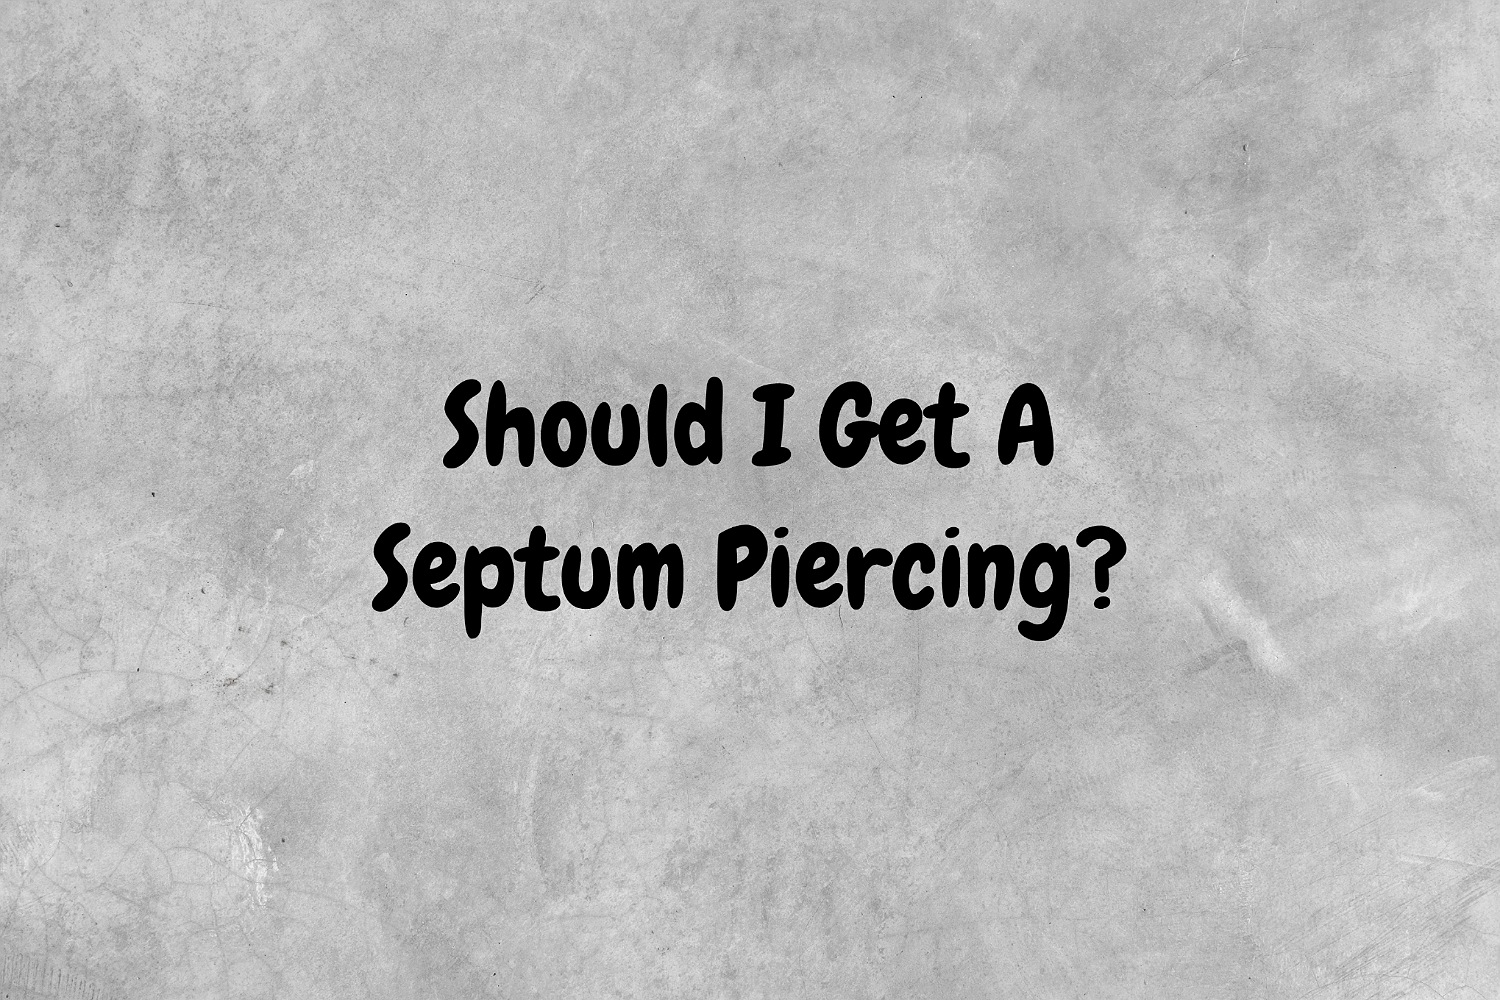 Should I Get A Septum Piercing?